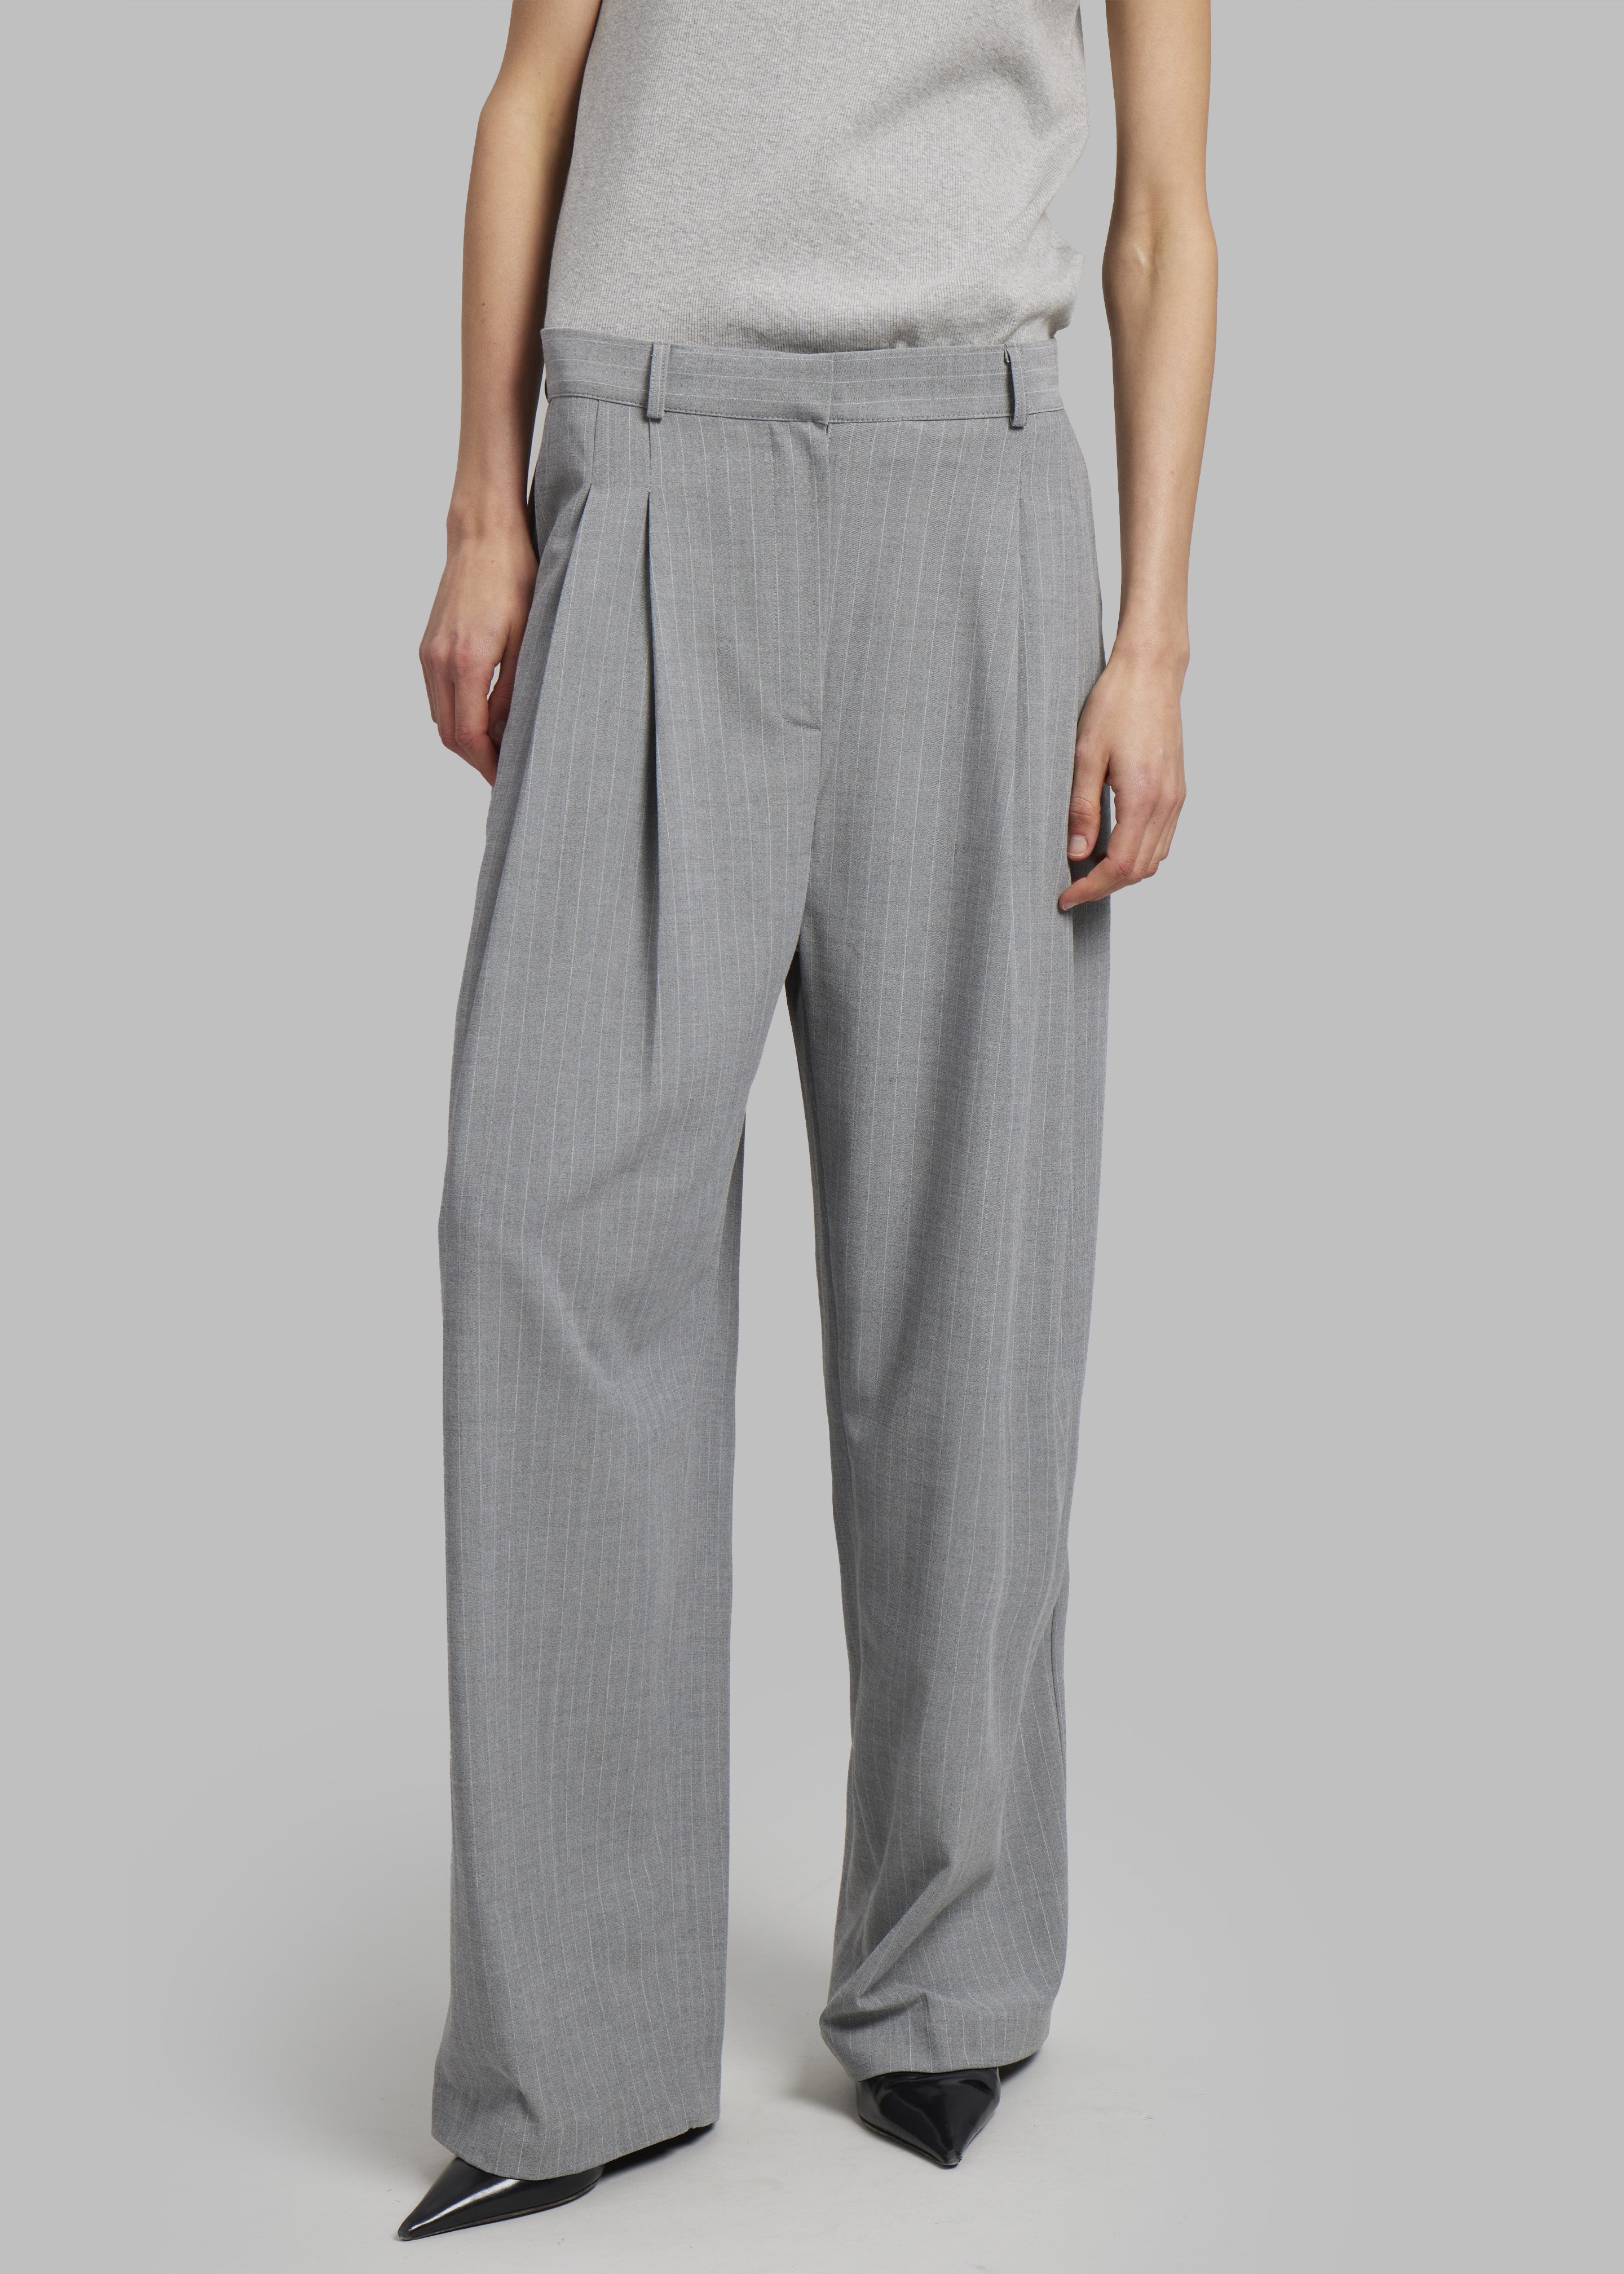 Sybil Trousers - Grey Pinstripe - 2